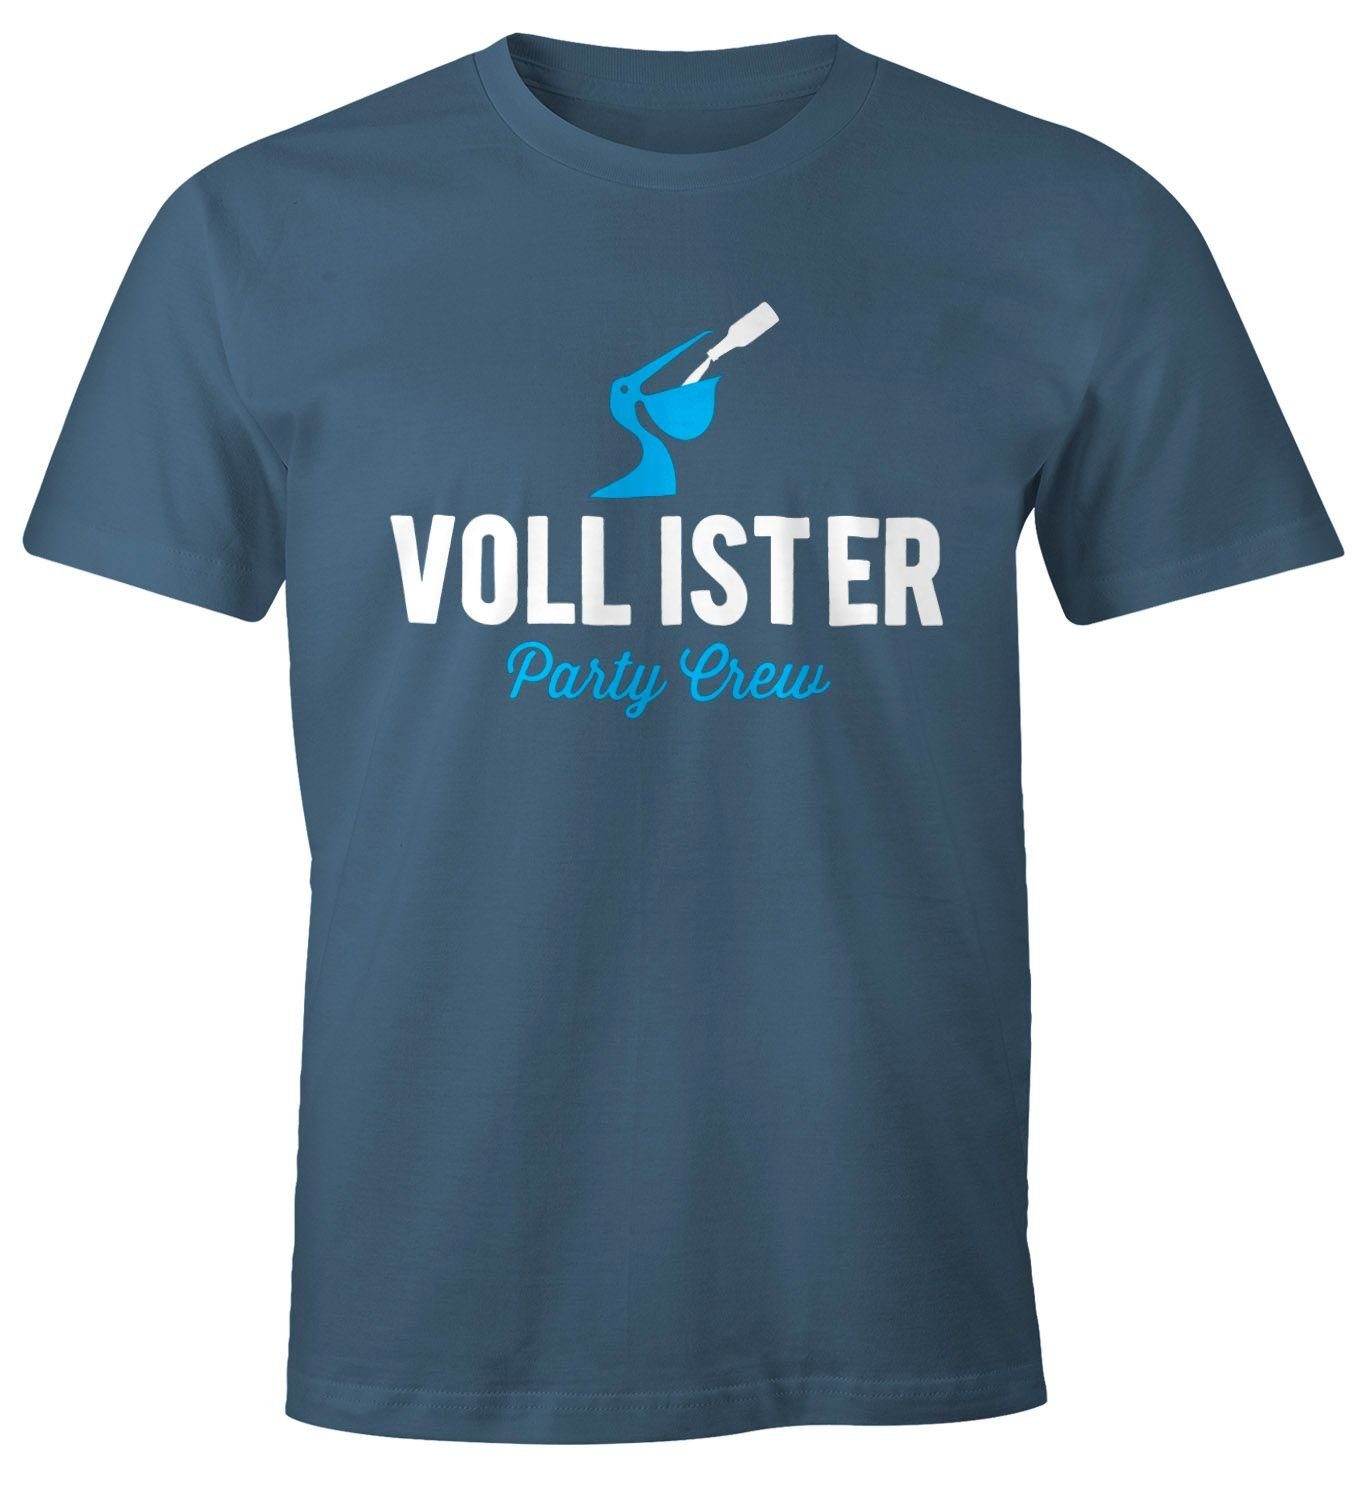 MoonWorks Print-Shirt Lustiges Herren T-Shirt Vollister Bier Fun-Shirt Moonworks® mit Print blau